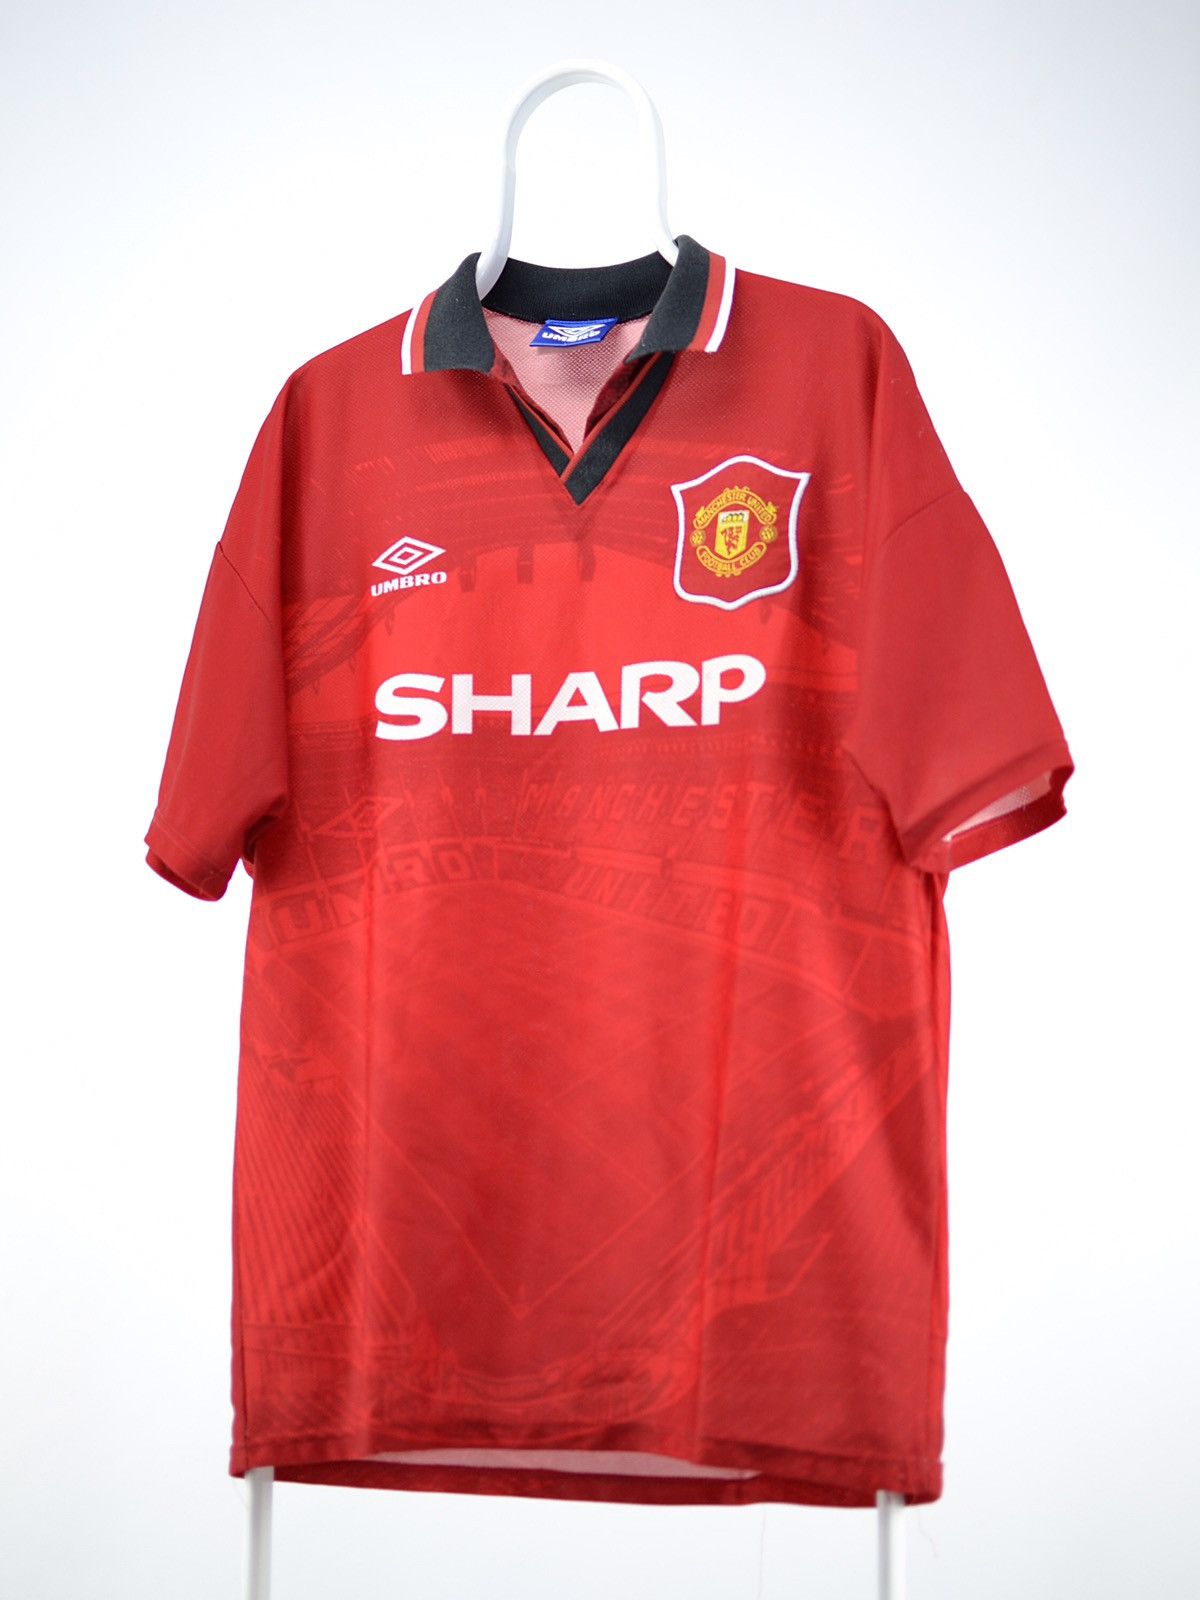 Umbro Vintage Manchester United Umbro Sharp Jersey Shirt 94/95 L Size US L / EU 52-54 / 3 - 4 Thumbnail